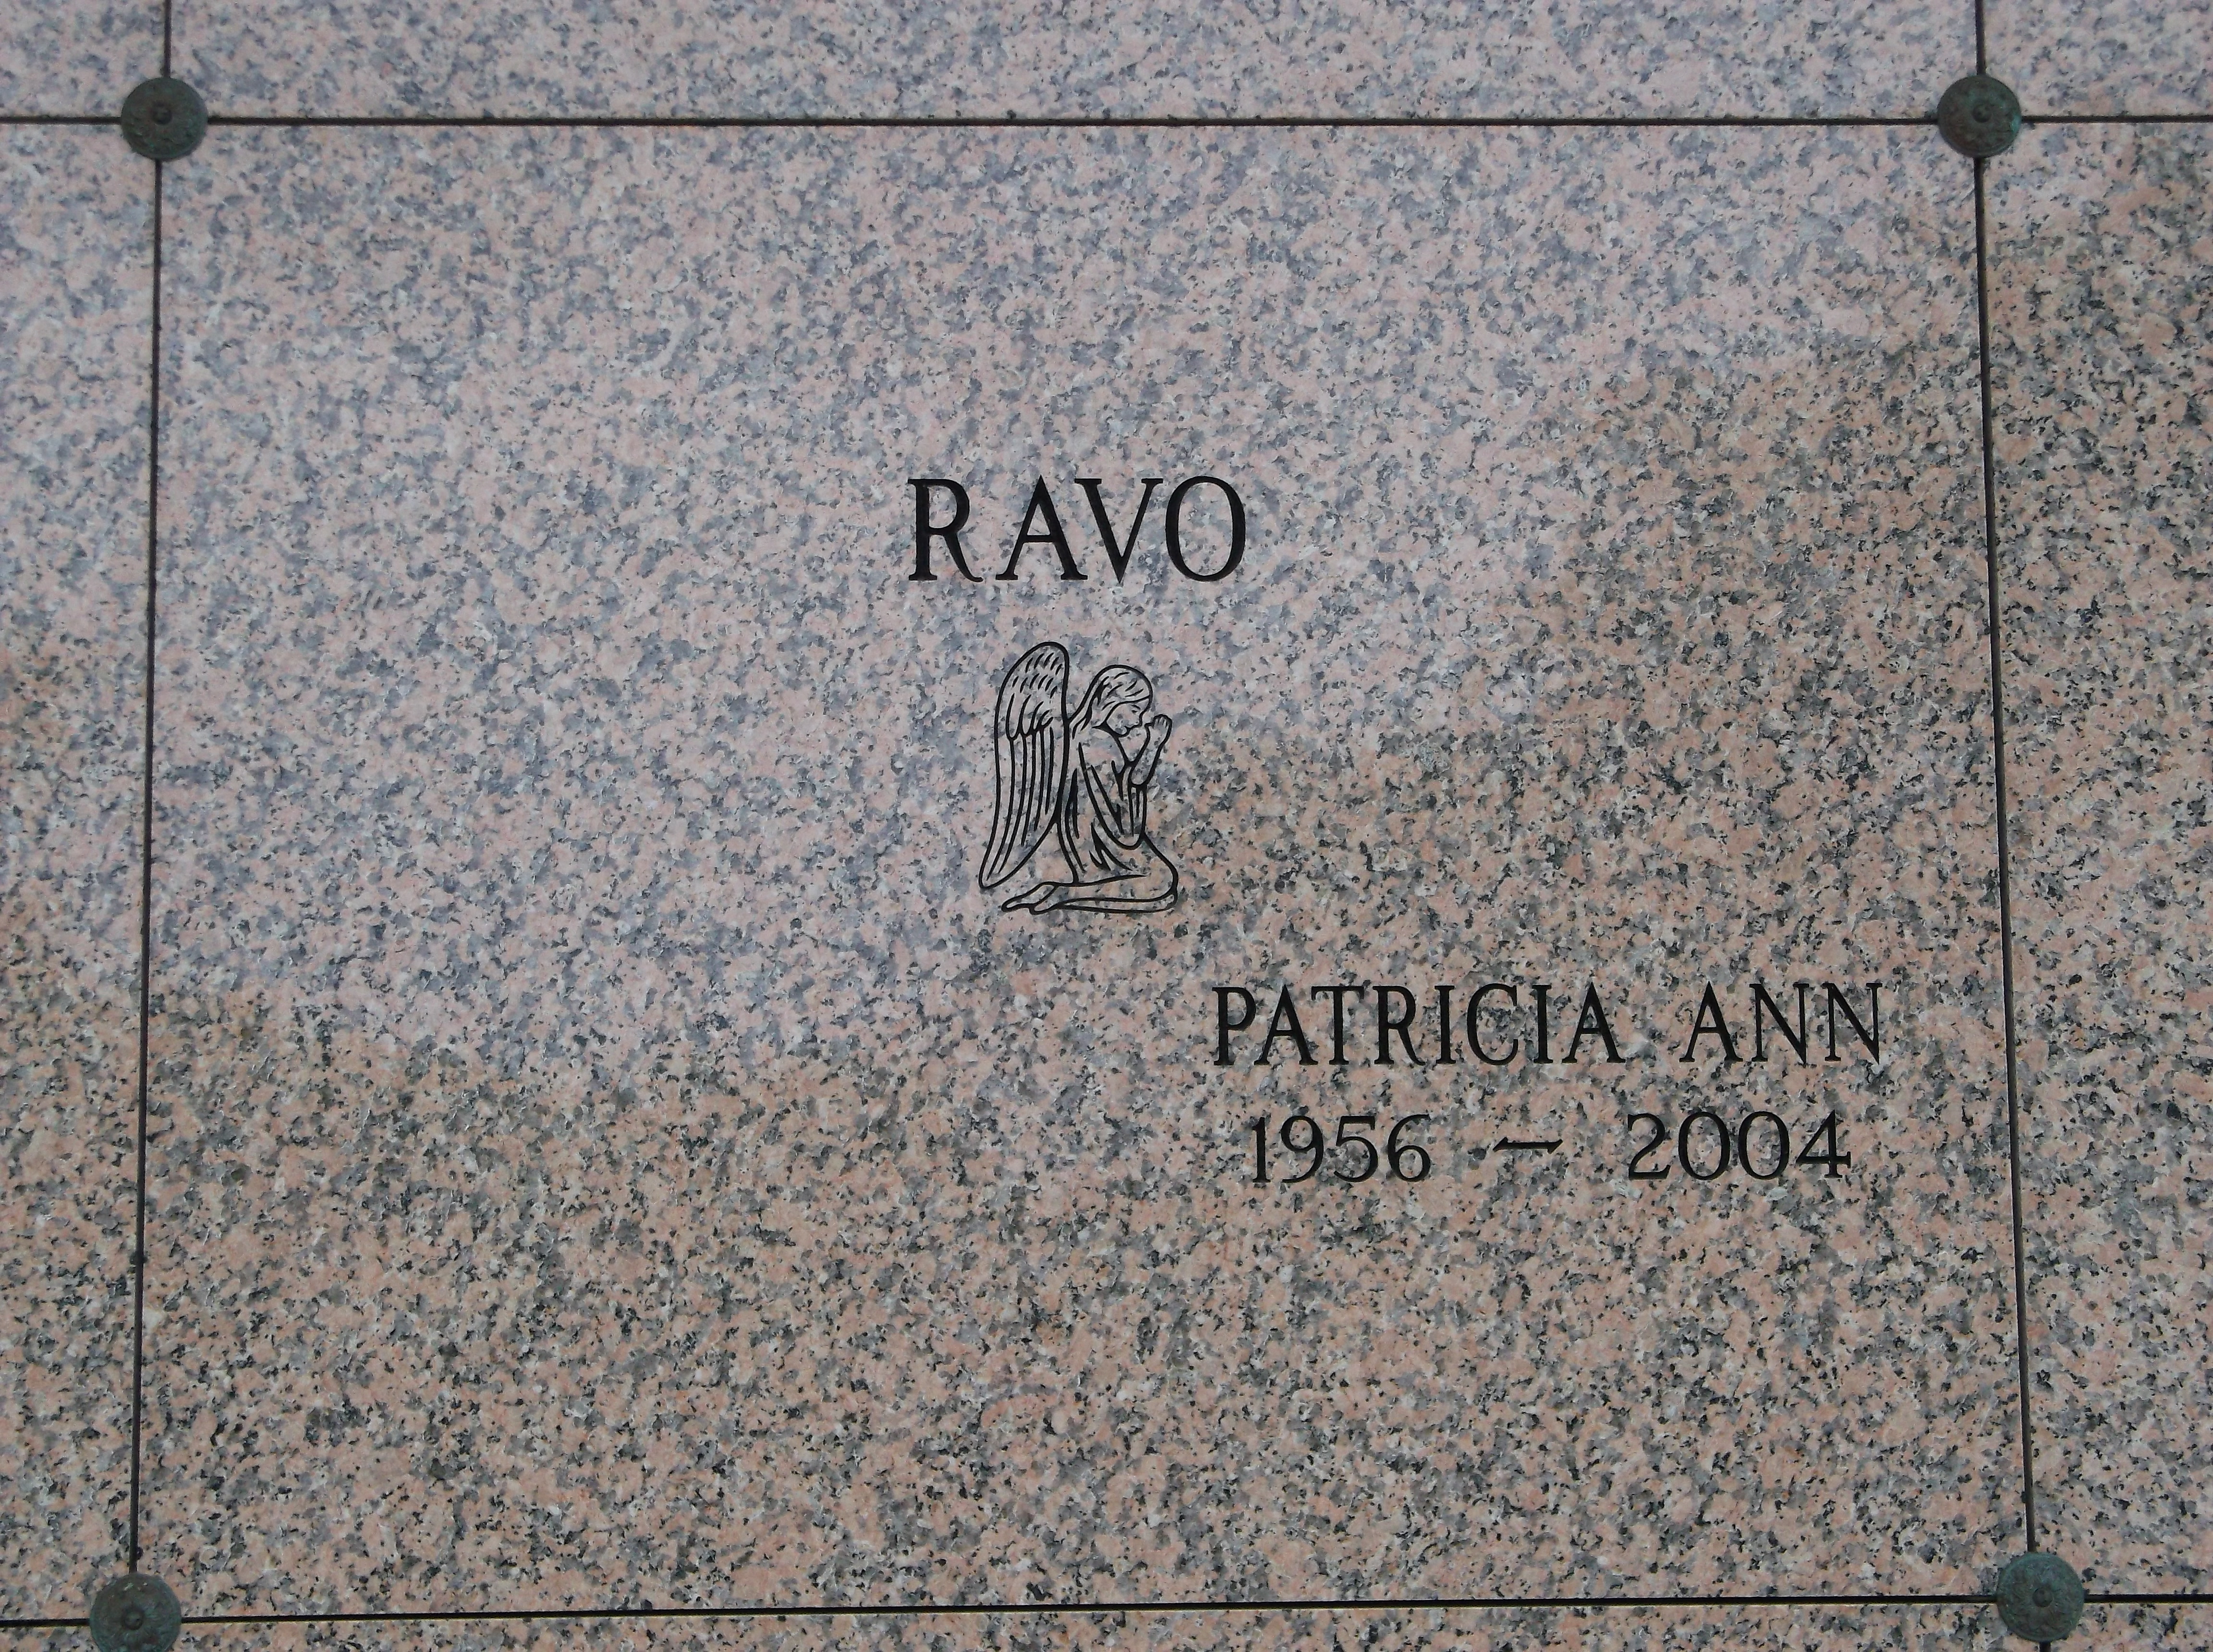 Patricia Ann Ravo